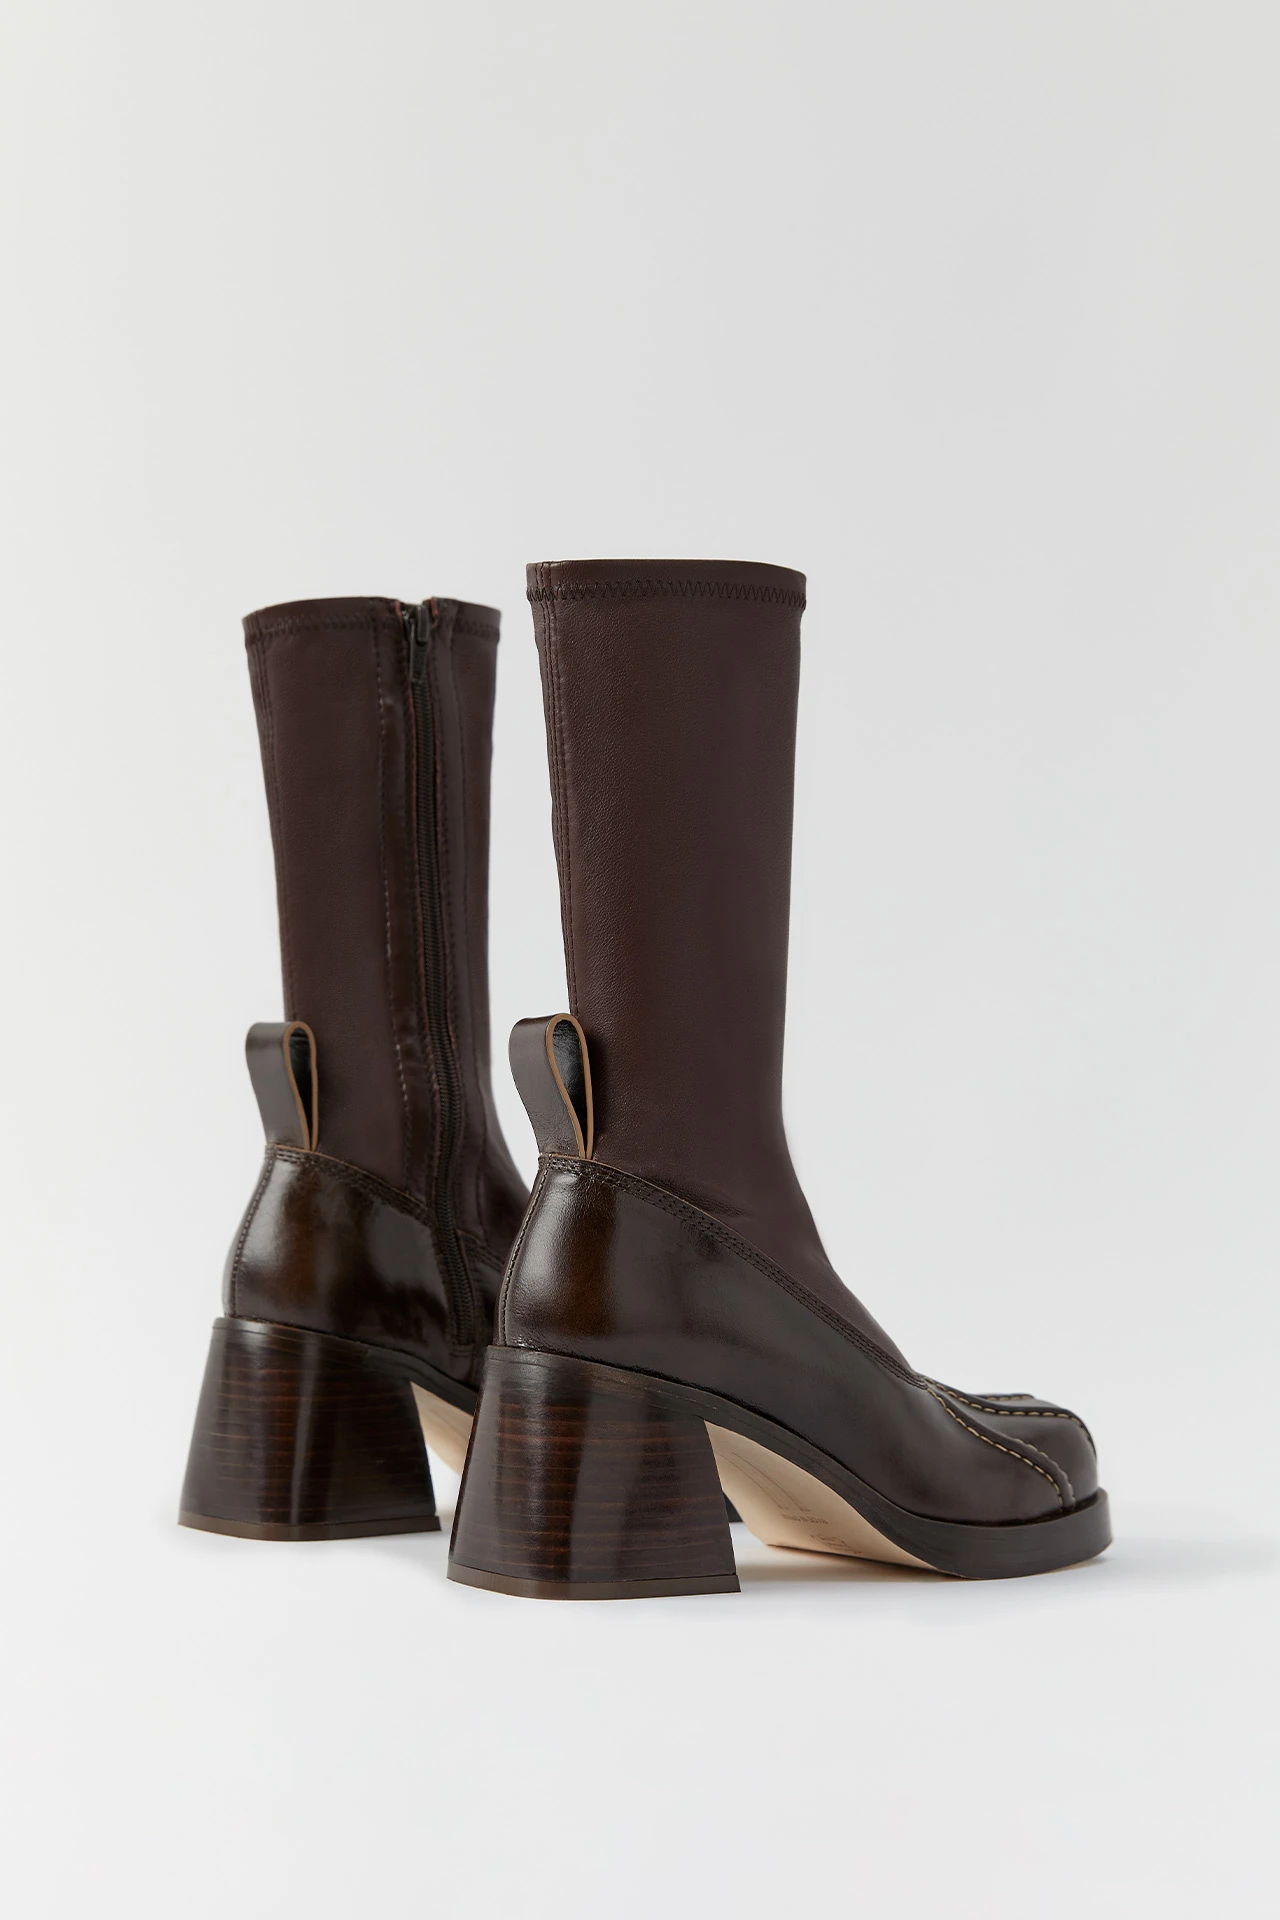 miista-mako-brown-boots-5